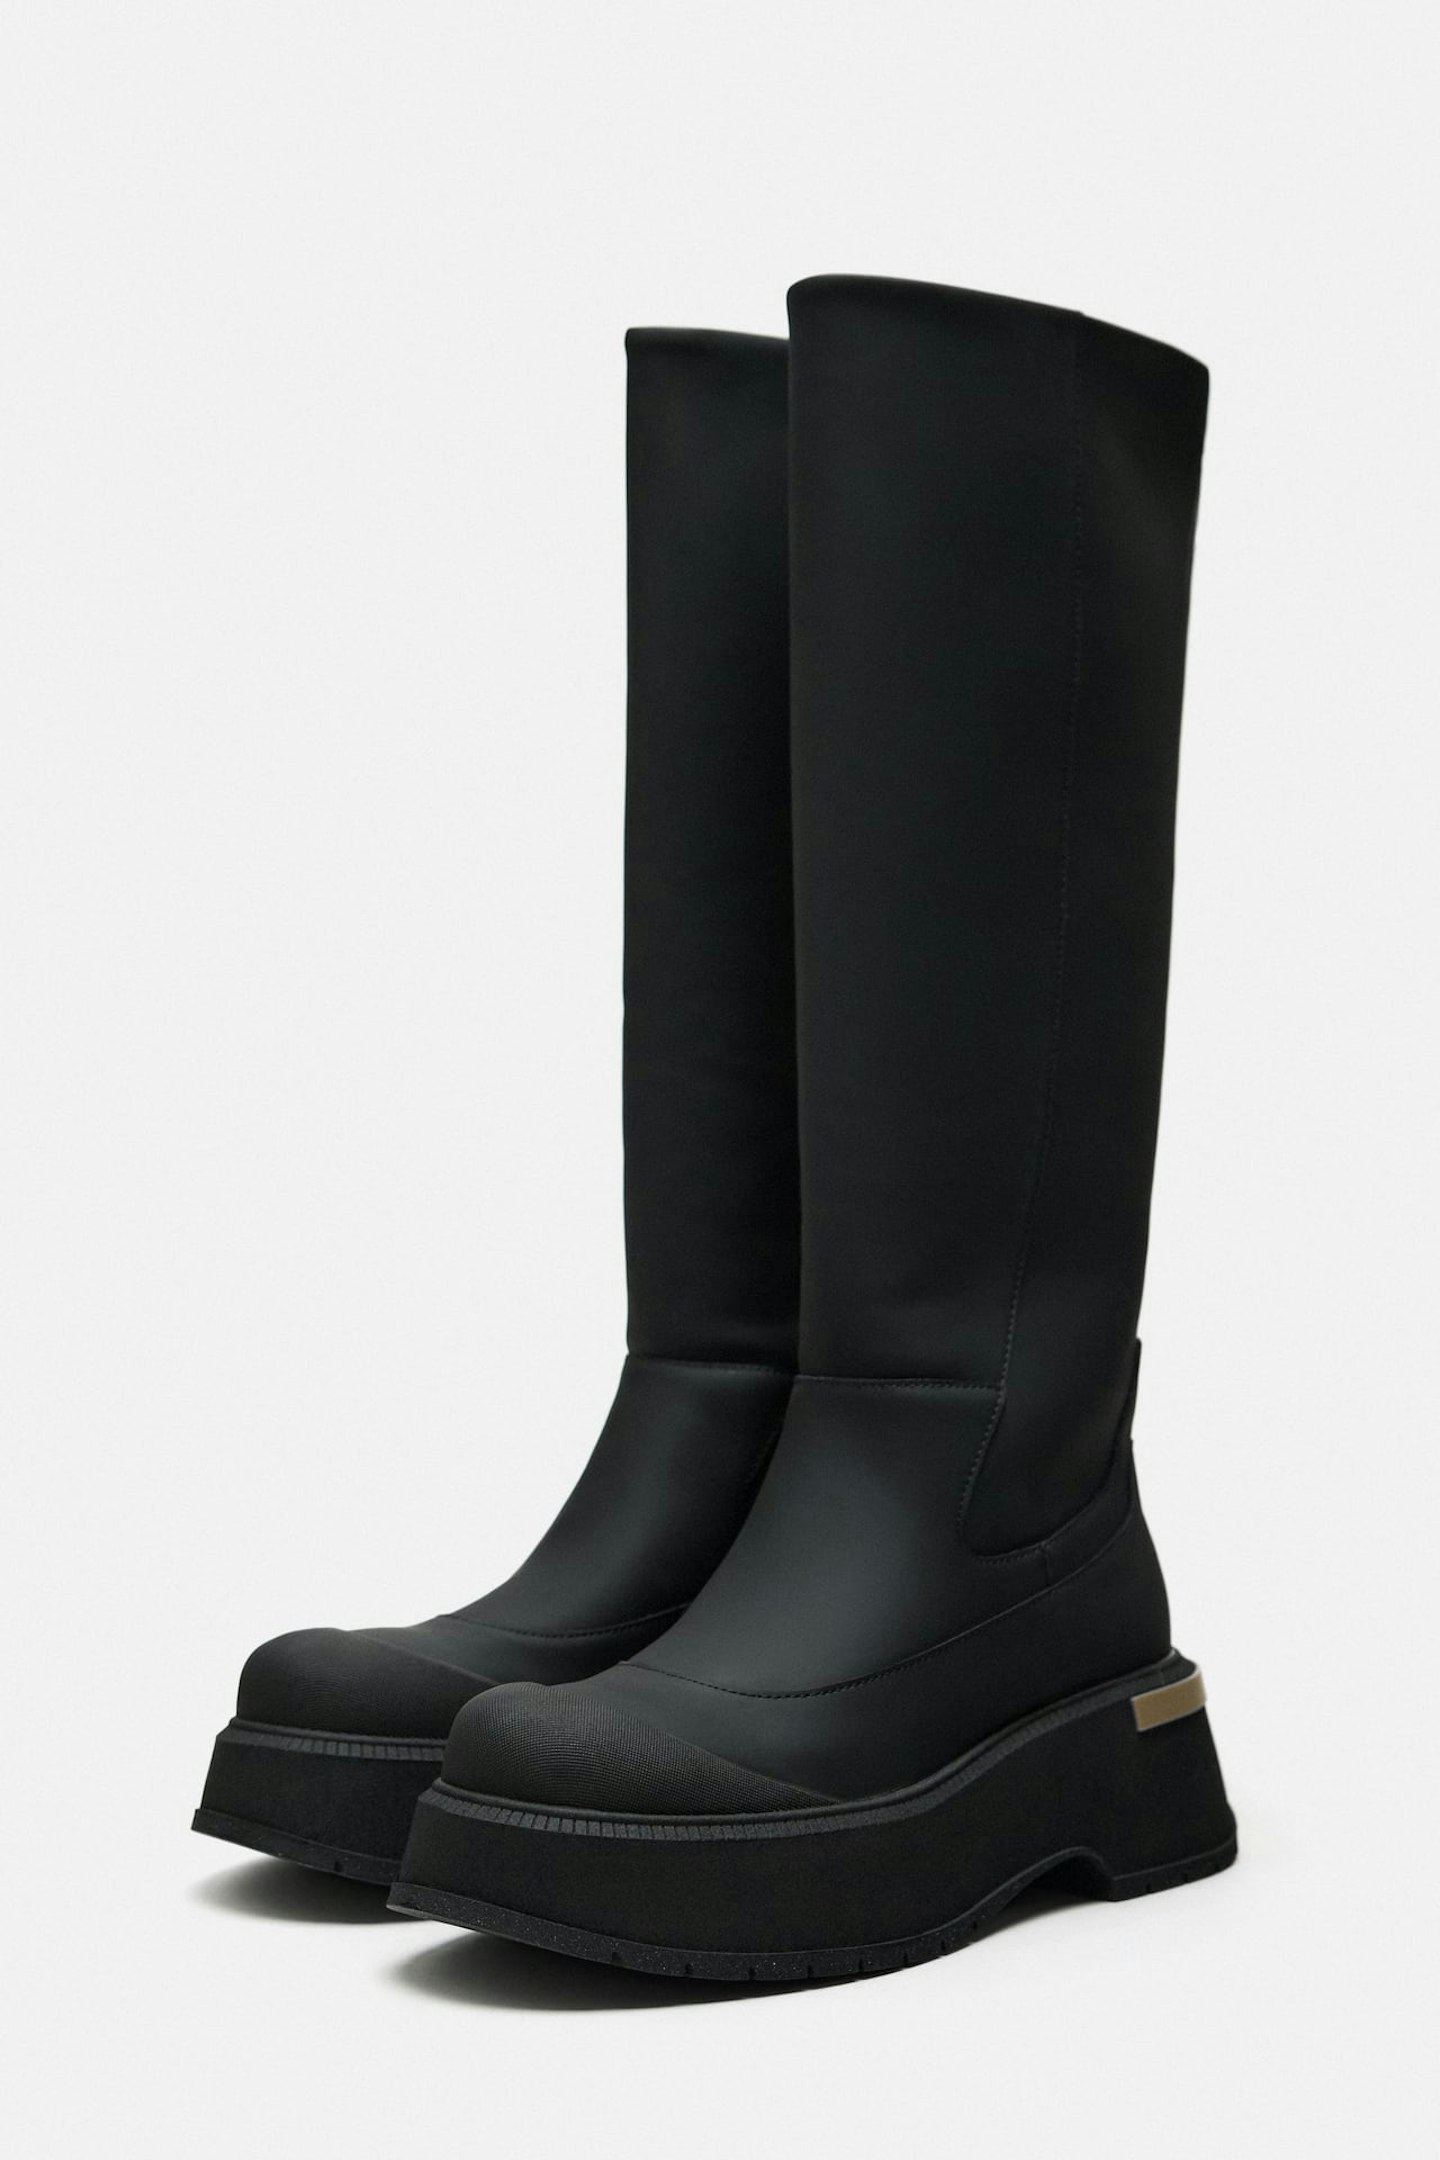 Zara Rubberised Boots